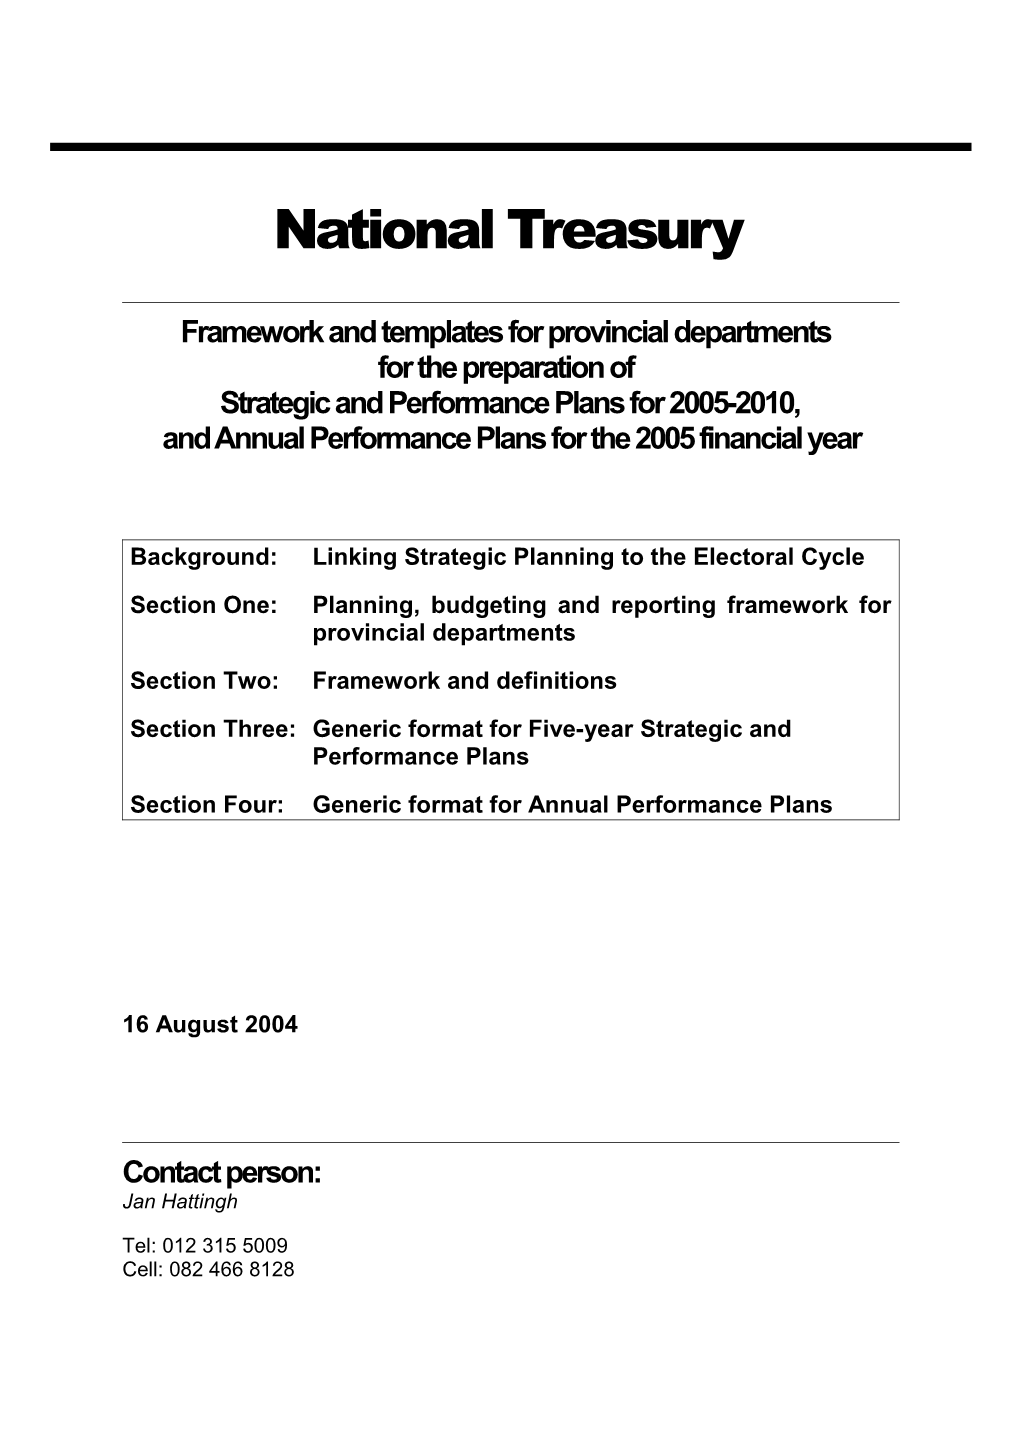 DP1-S01 - Generic Strategic Planning Framework-2004-08-16